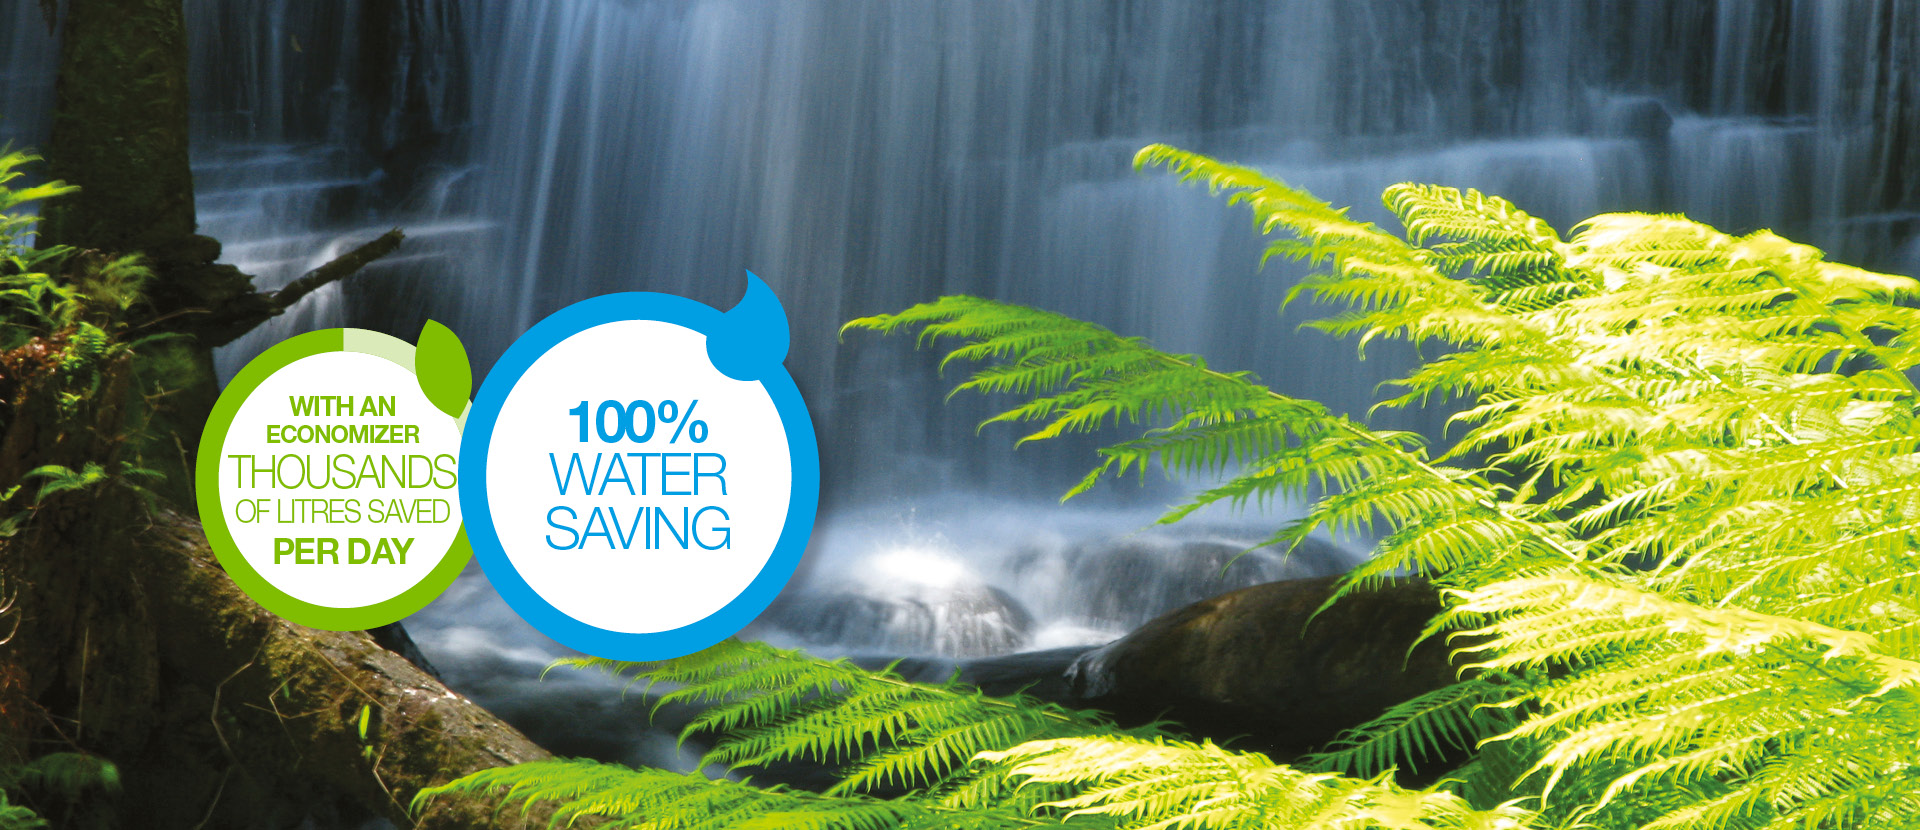 BRX _ Economizer water saving thousands litres saved